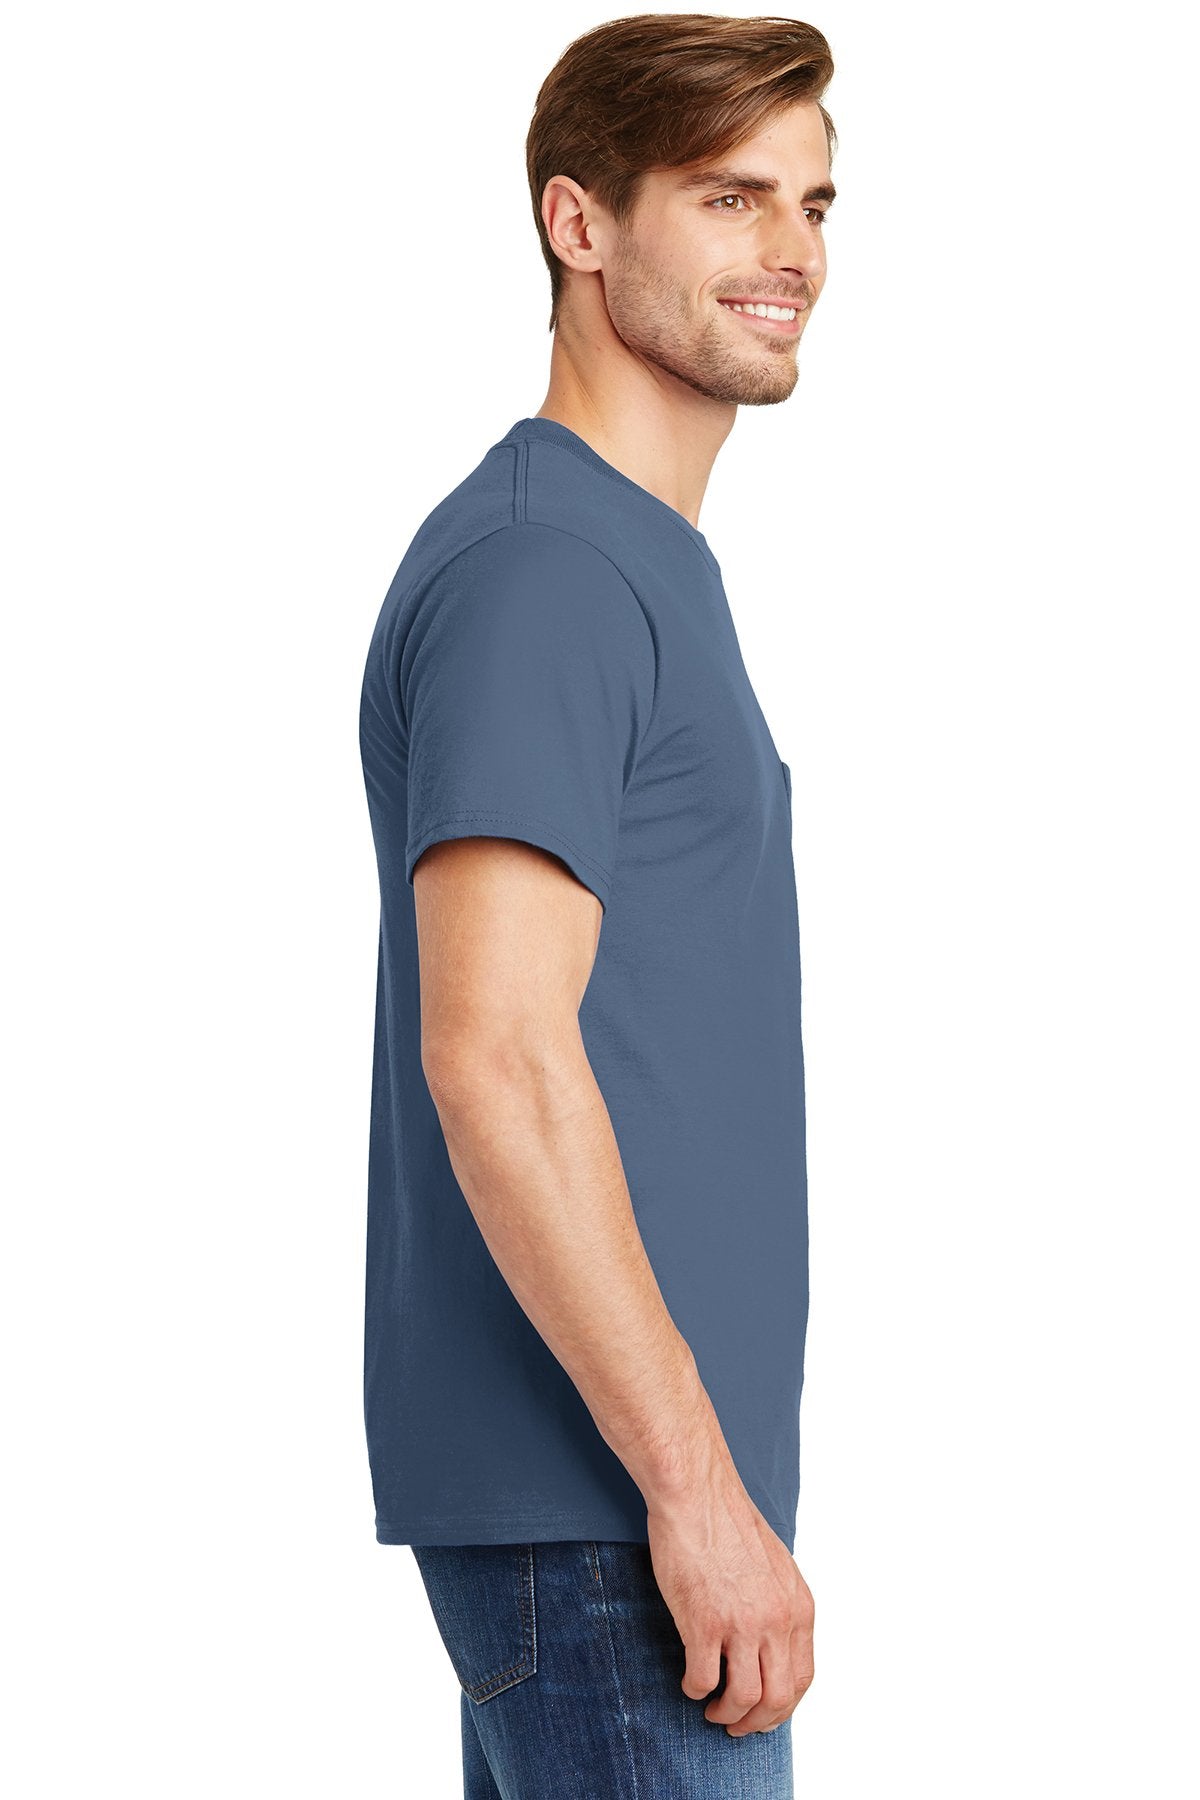 hanes beefy cotton t shirt with pocket 5190 denim blue